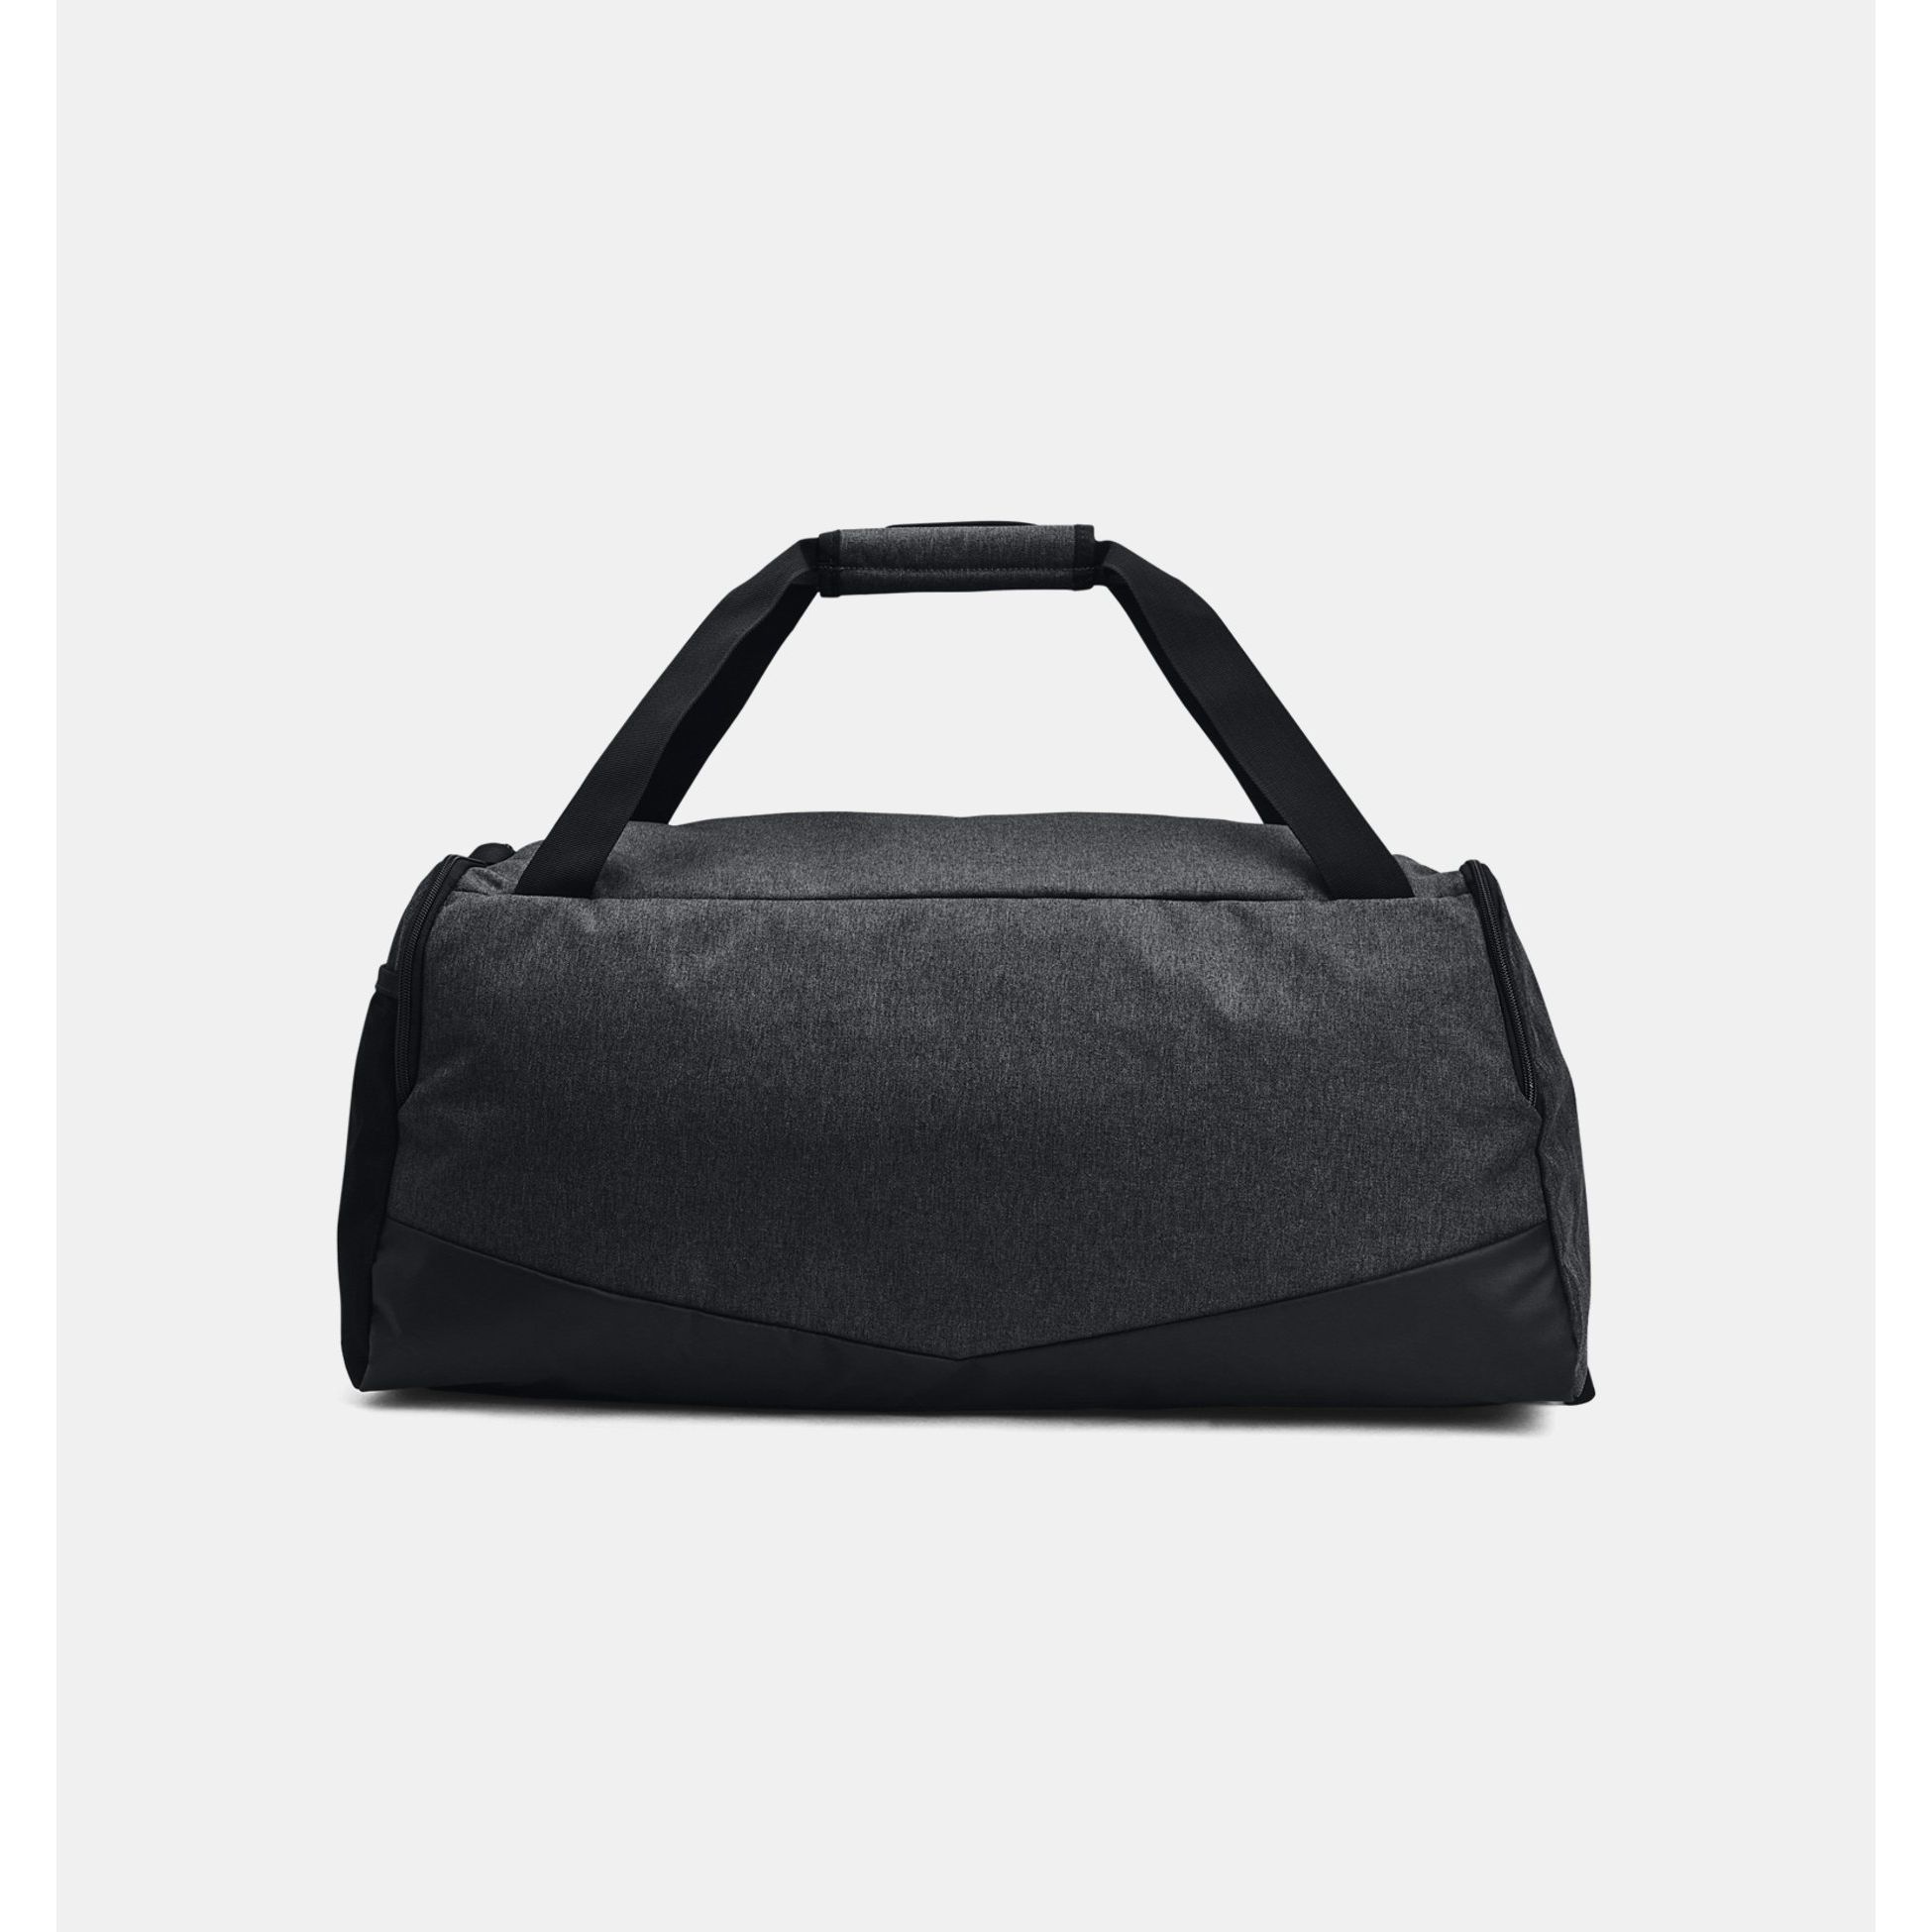 Bagpacks -  under armour UA Undeniable 5.0 MD Duffle Bag